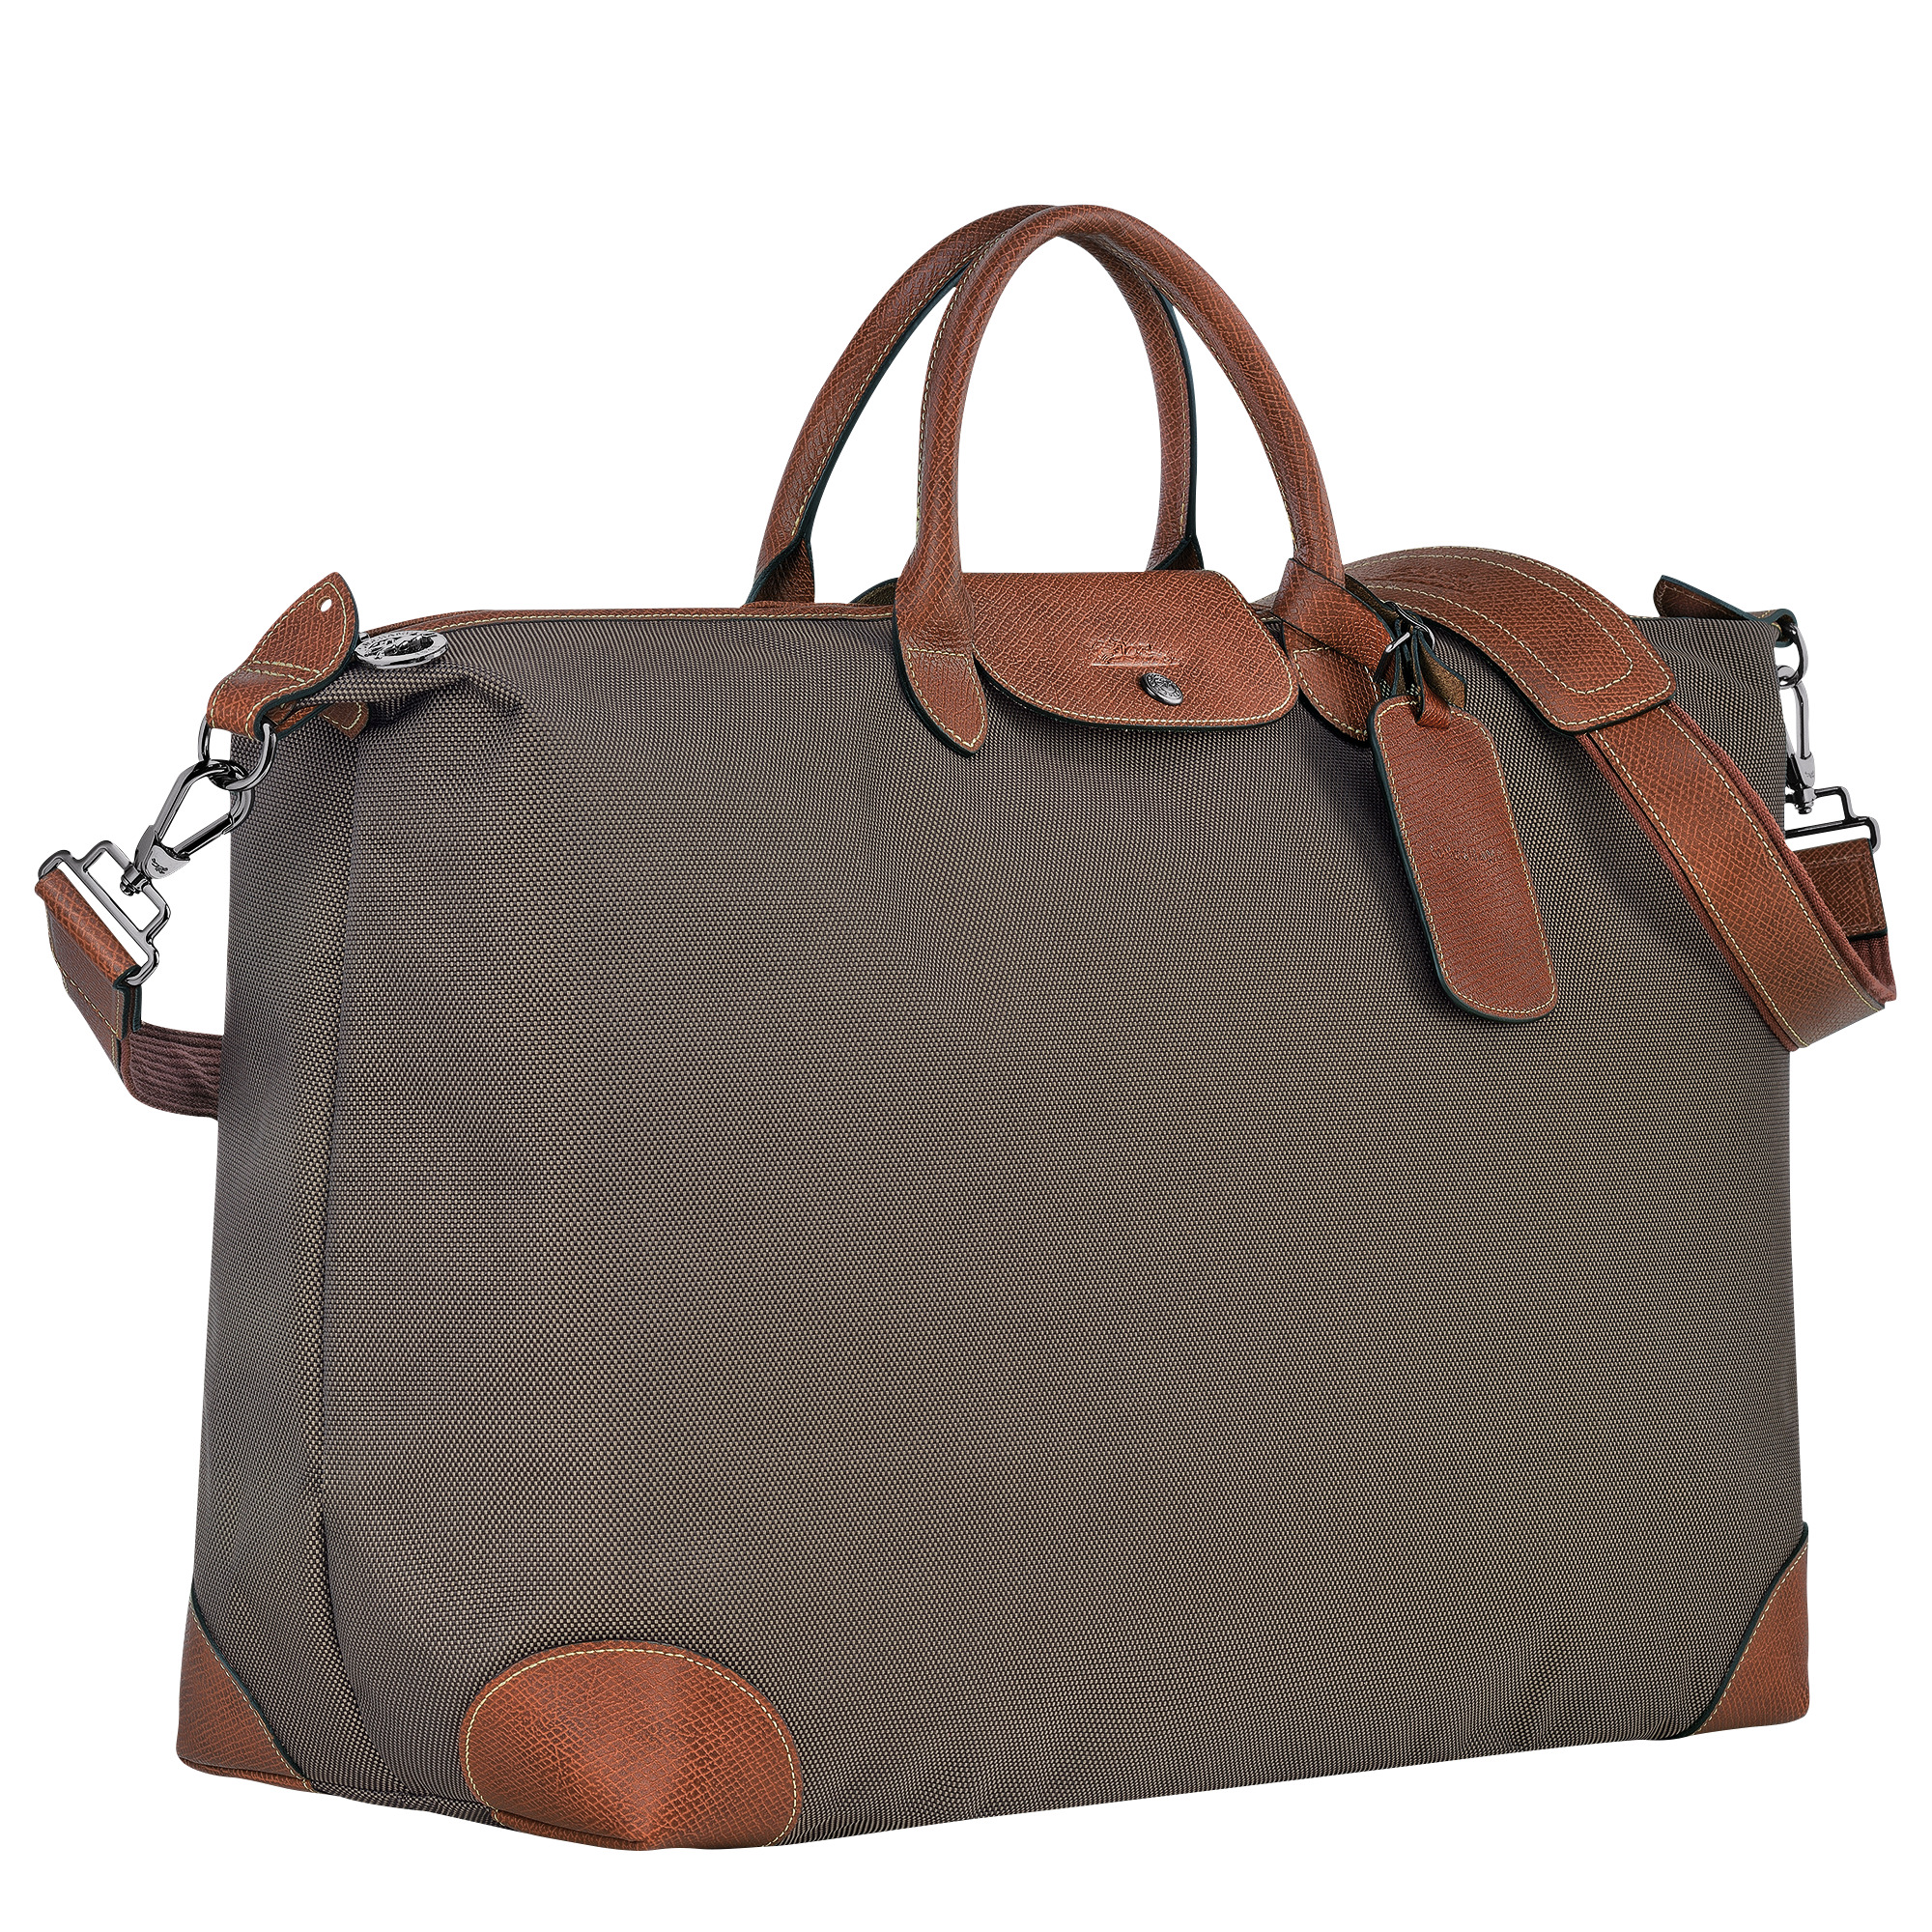 Boxford M Travel bag Brown - Canvas - 2